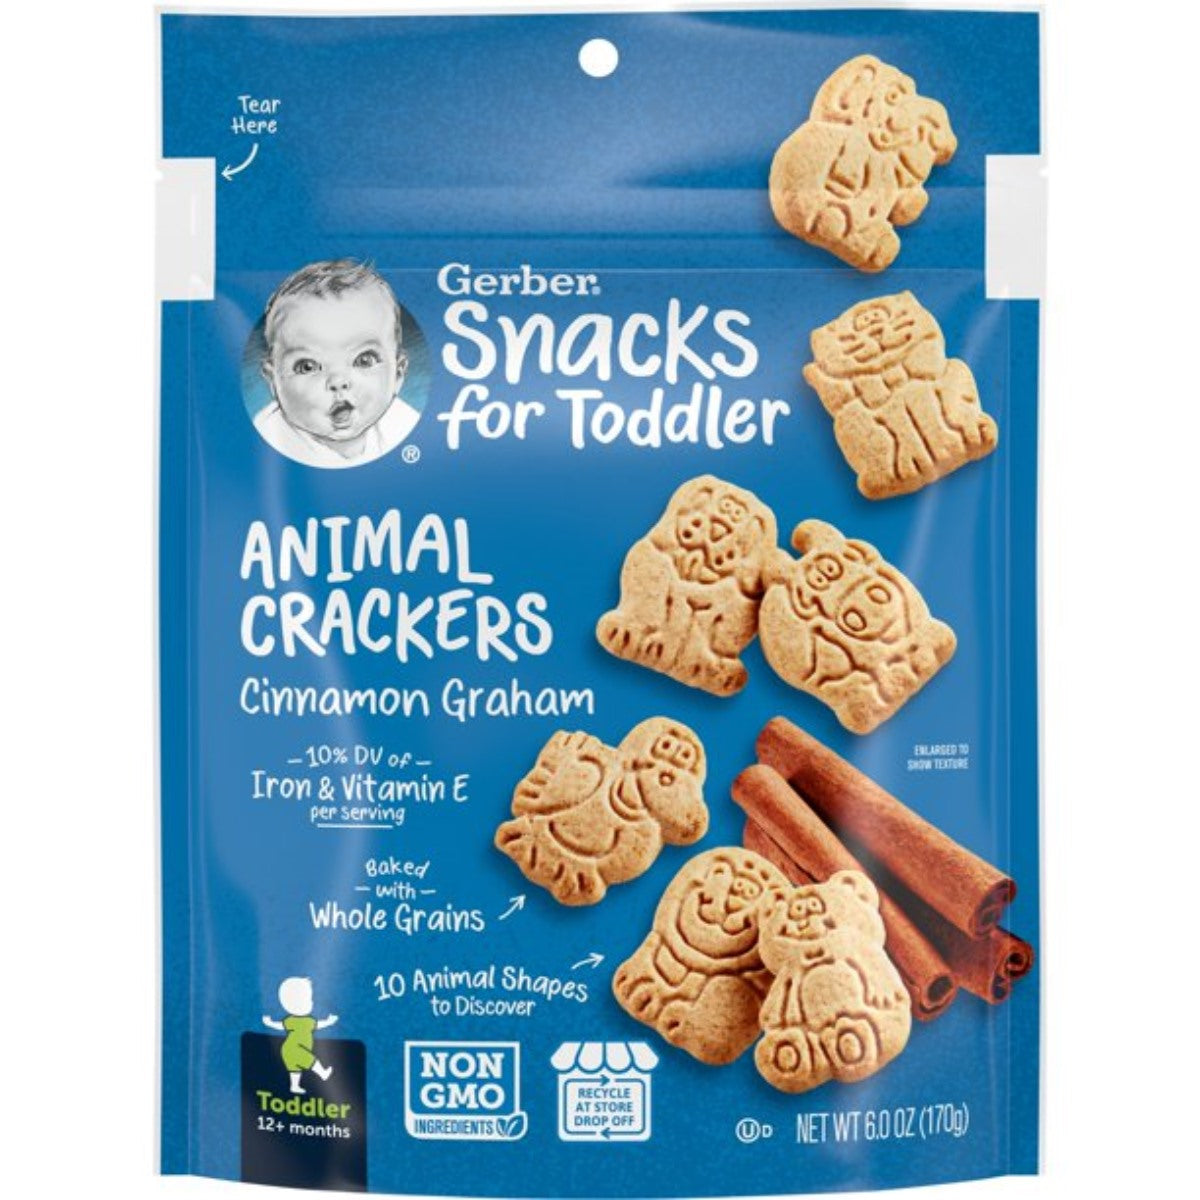 Gerber Snacks for Baby, Animal Crackers for Toddler - Cinnamon Graham